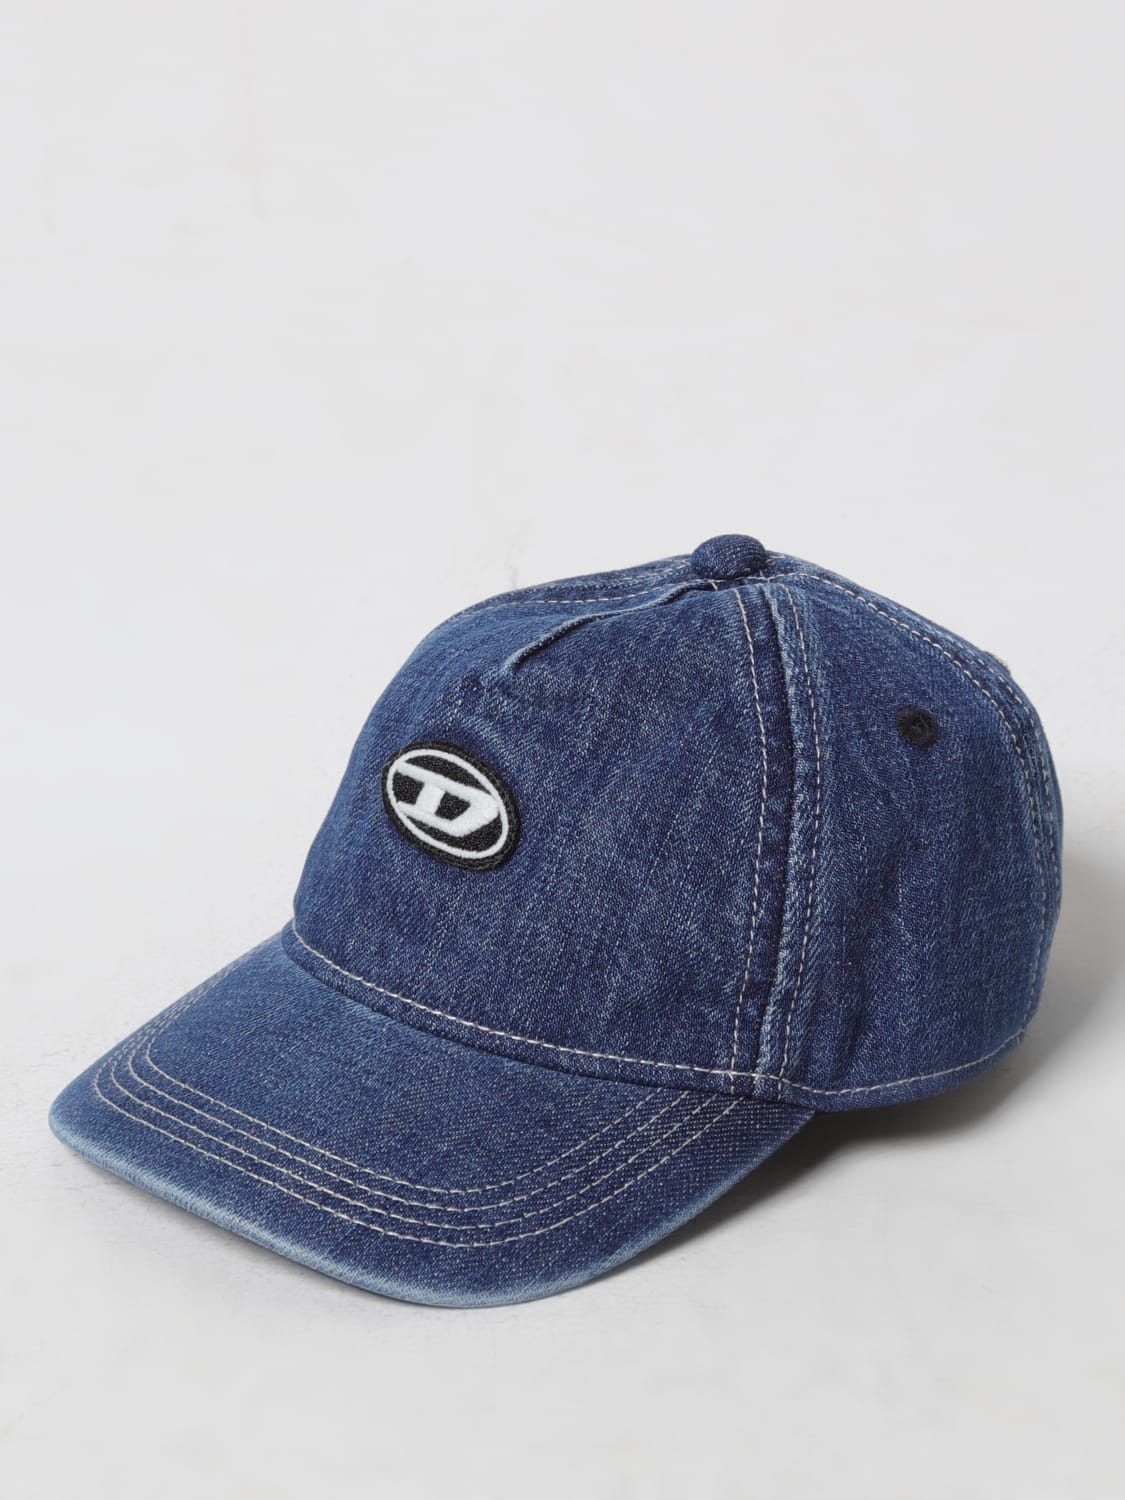 DIESEL：帽子儿童- 牛仔布| Diesel 帽子K00526KXBFQ 在线就在GIGLIO.COM